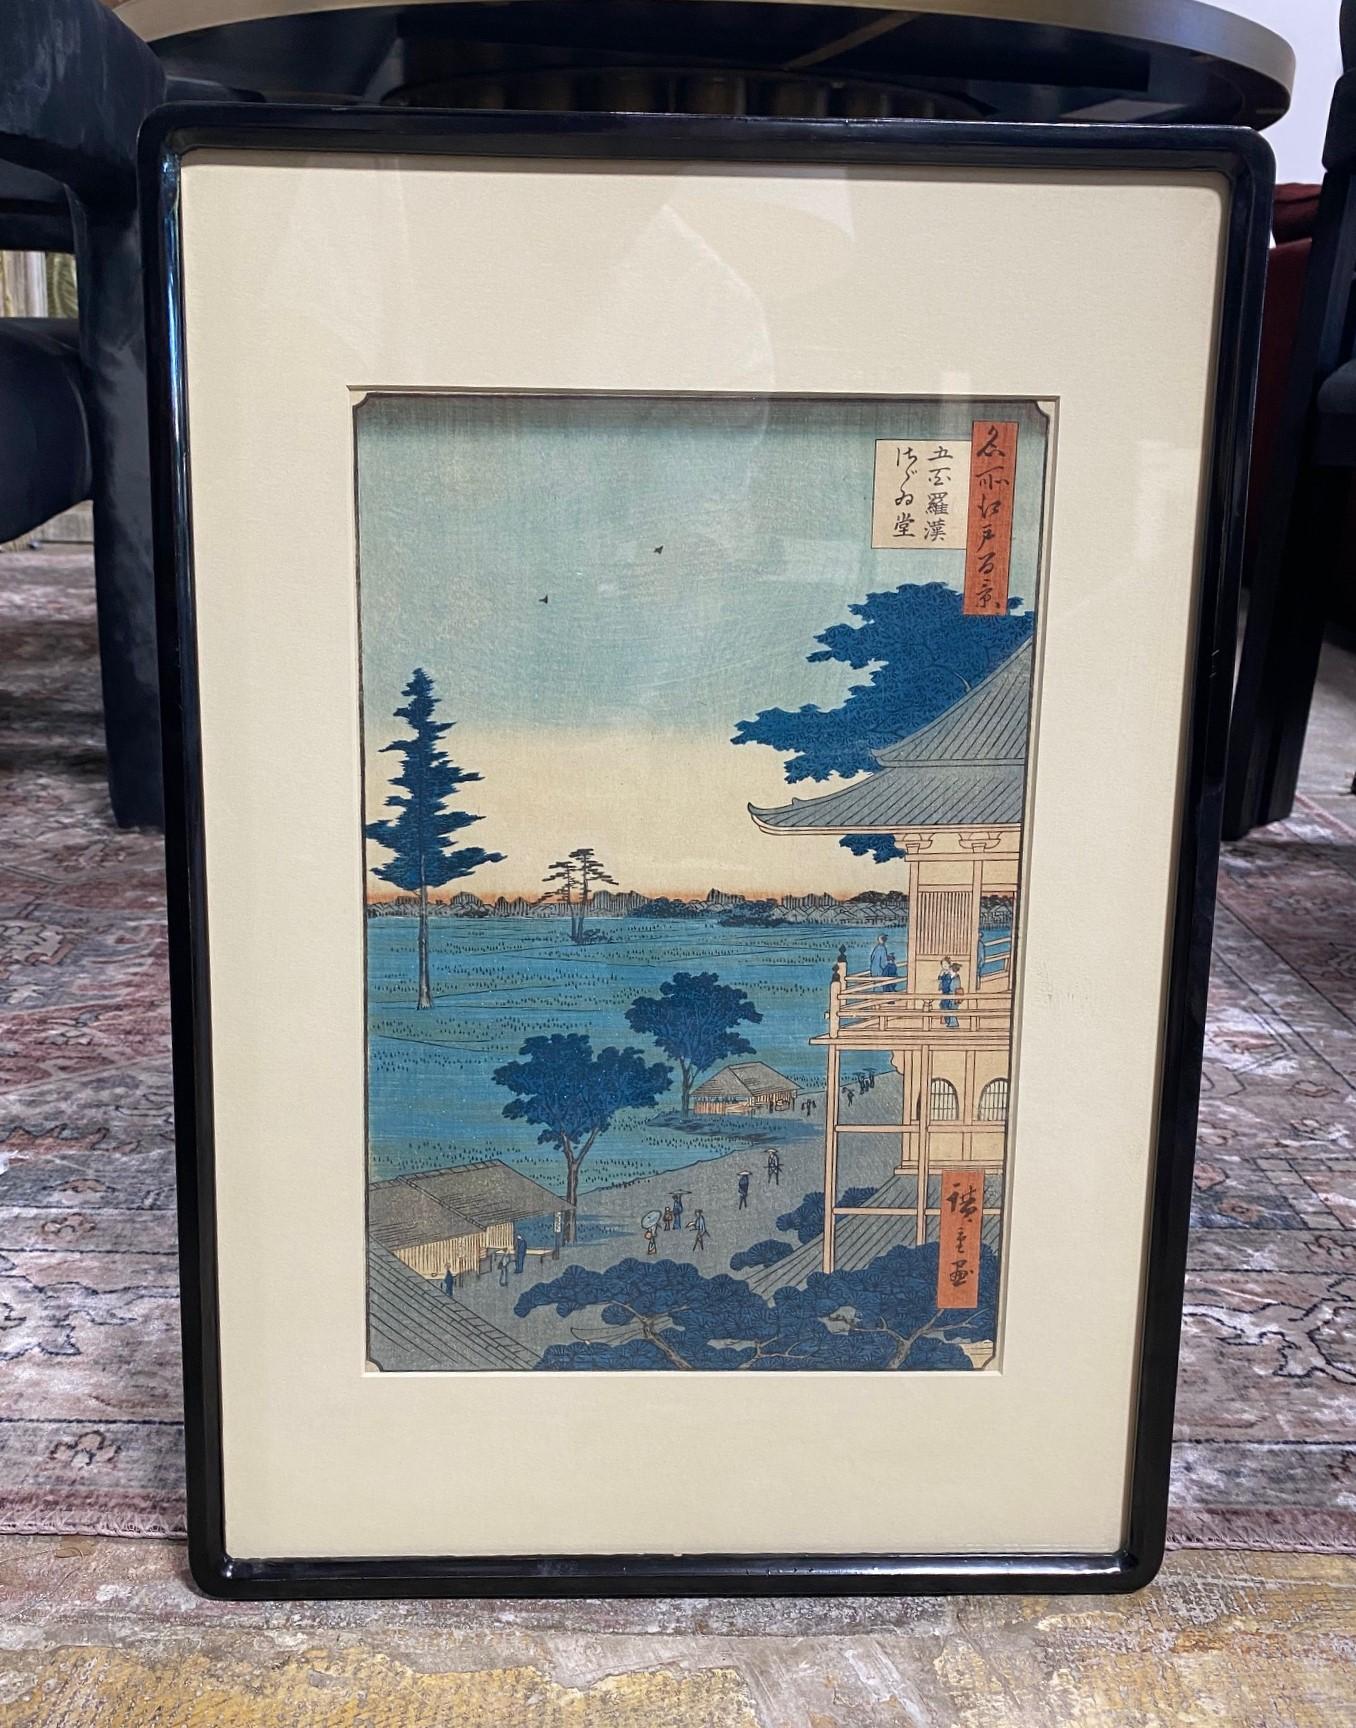 A wonderful Japanese woodblock print by famed Japanese artist Utagawa Hiroshige (Ando Hiroshige) (1797-1858) titled 